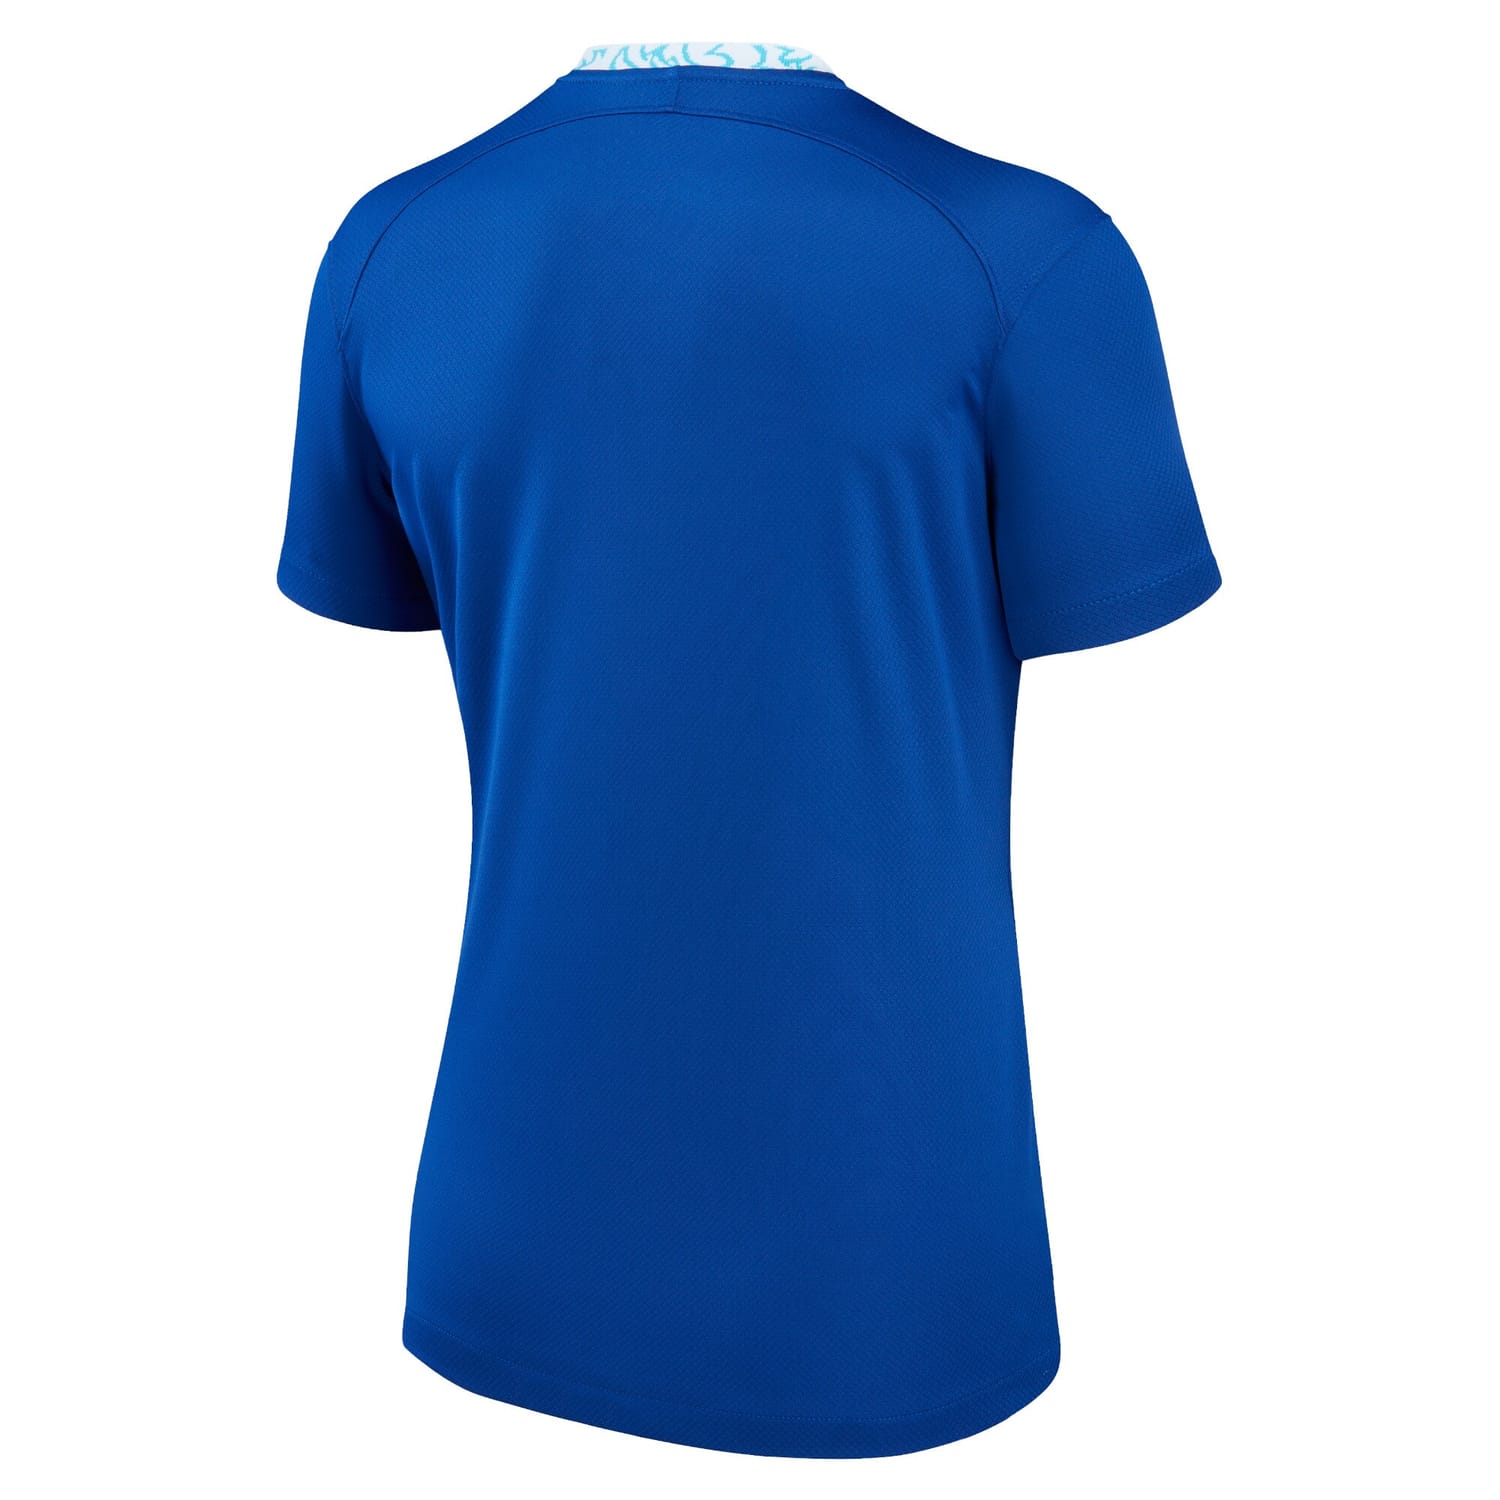 Premier League Chelsea Home Jersey Shirt 2022-23 for Women